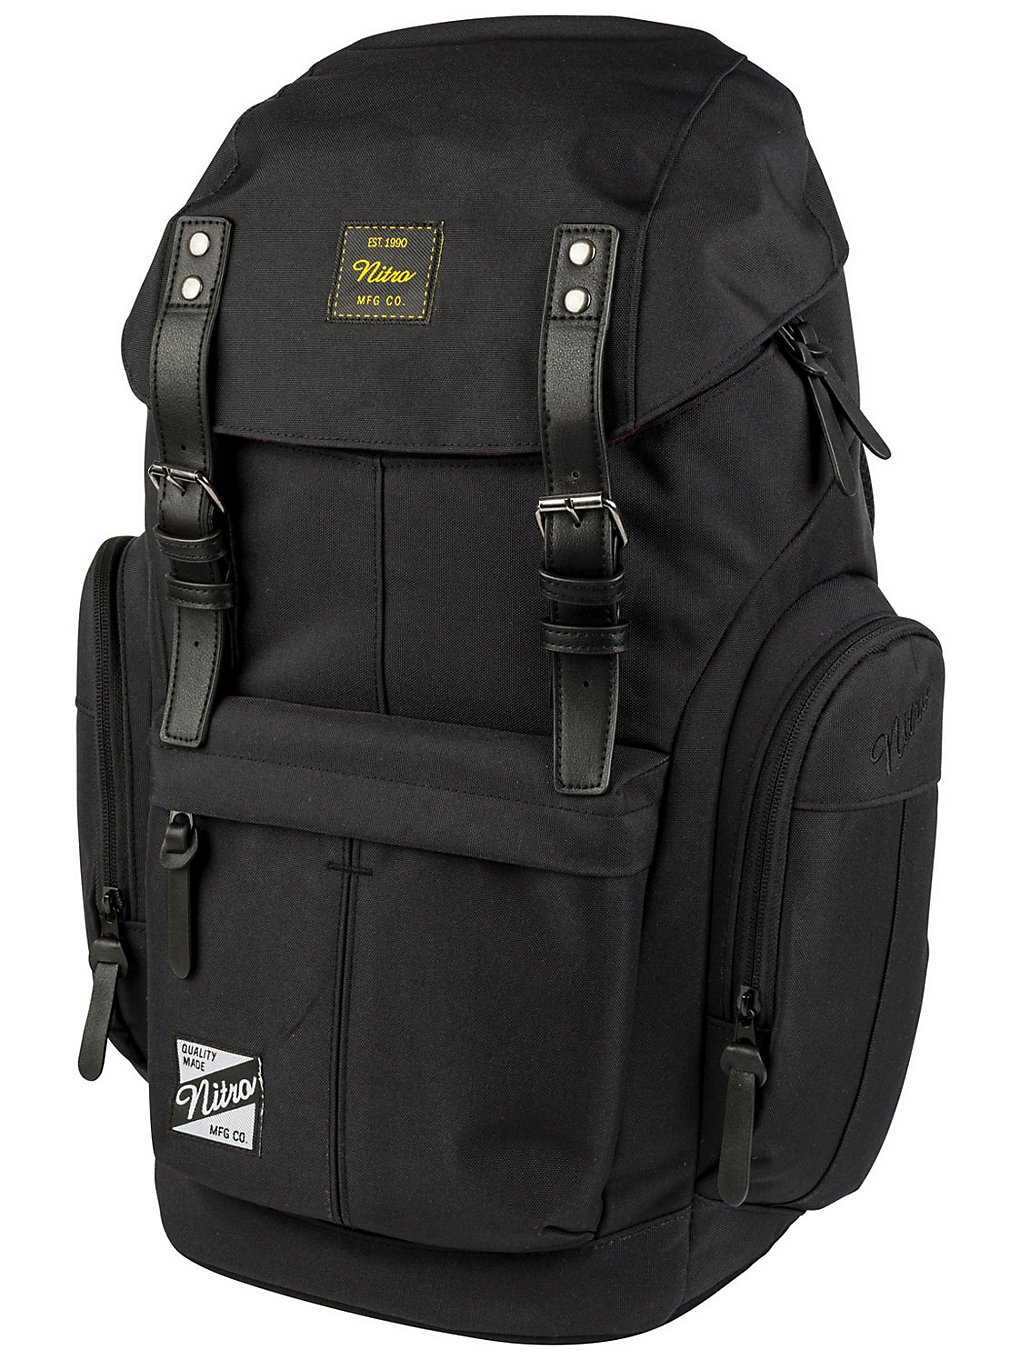 Nitro daypacker backpack musta, nitro